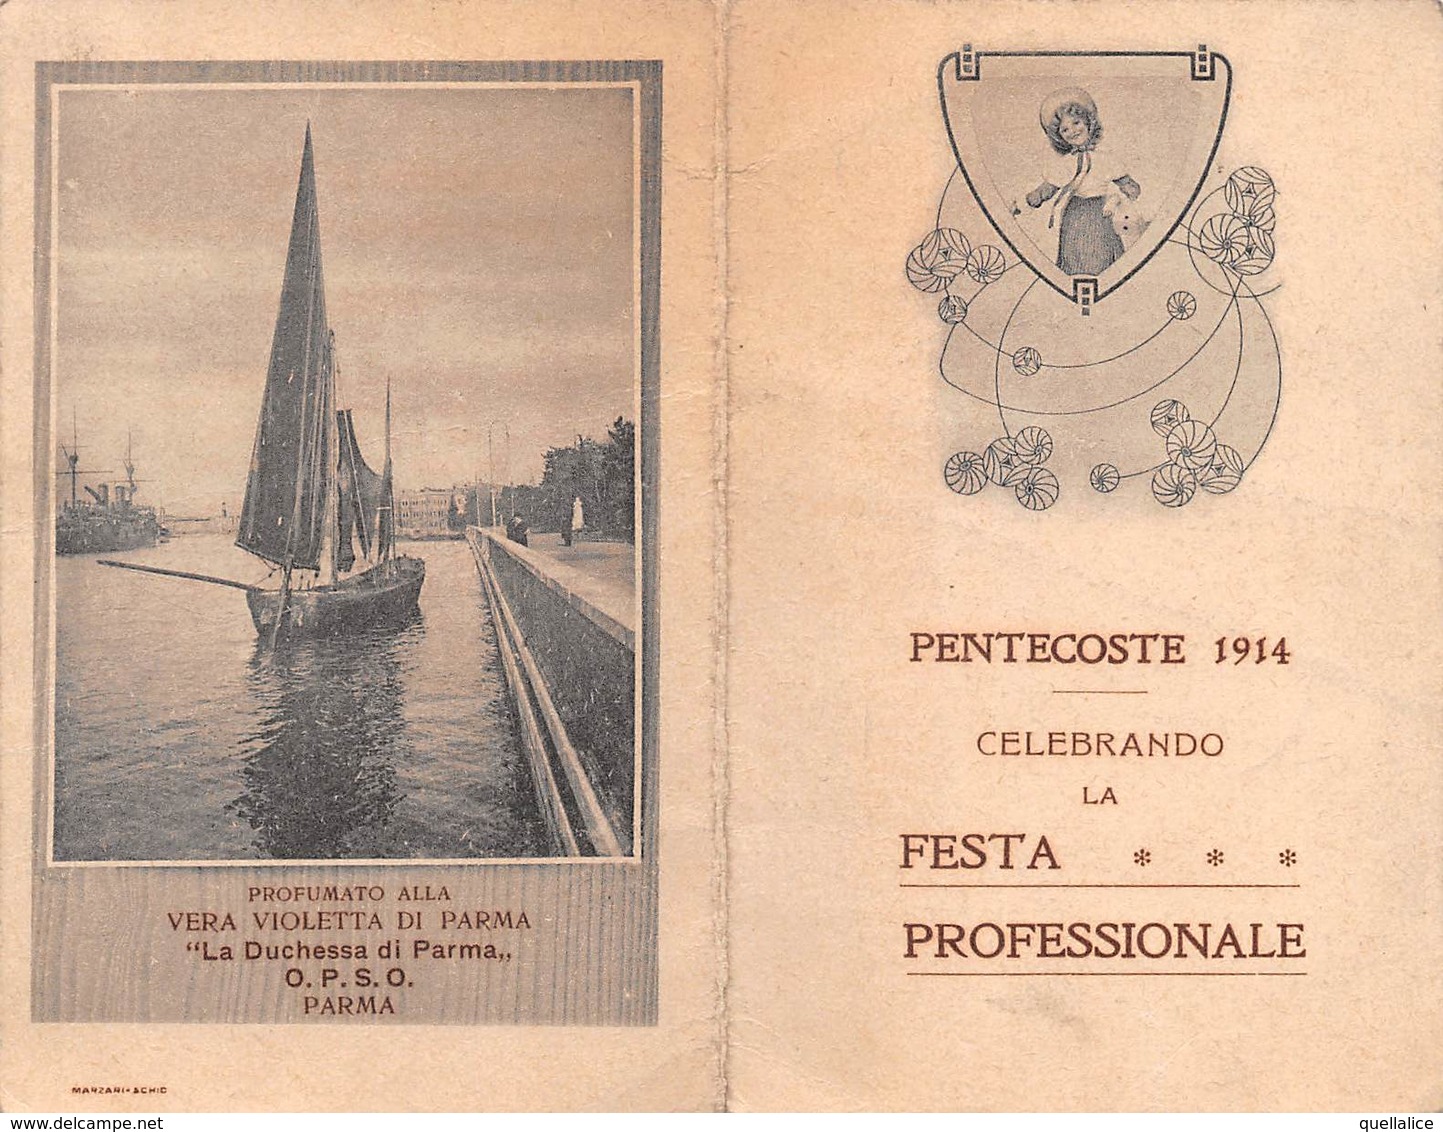 0608 "CALENDARIO - PENTECOSTE 1914 CELEBRANDO LA FESTA PROFESSIONALE - PROFUMATO ALLA VIOLETTA DI PARMA" ORIG - Klein Formaat: 1901-20